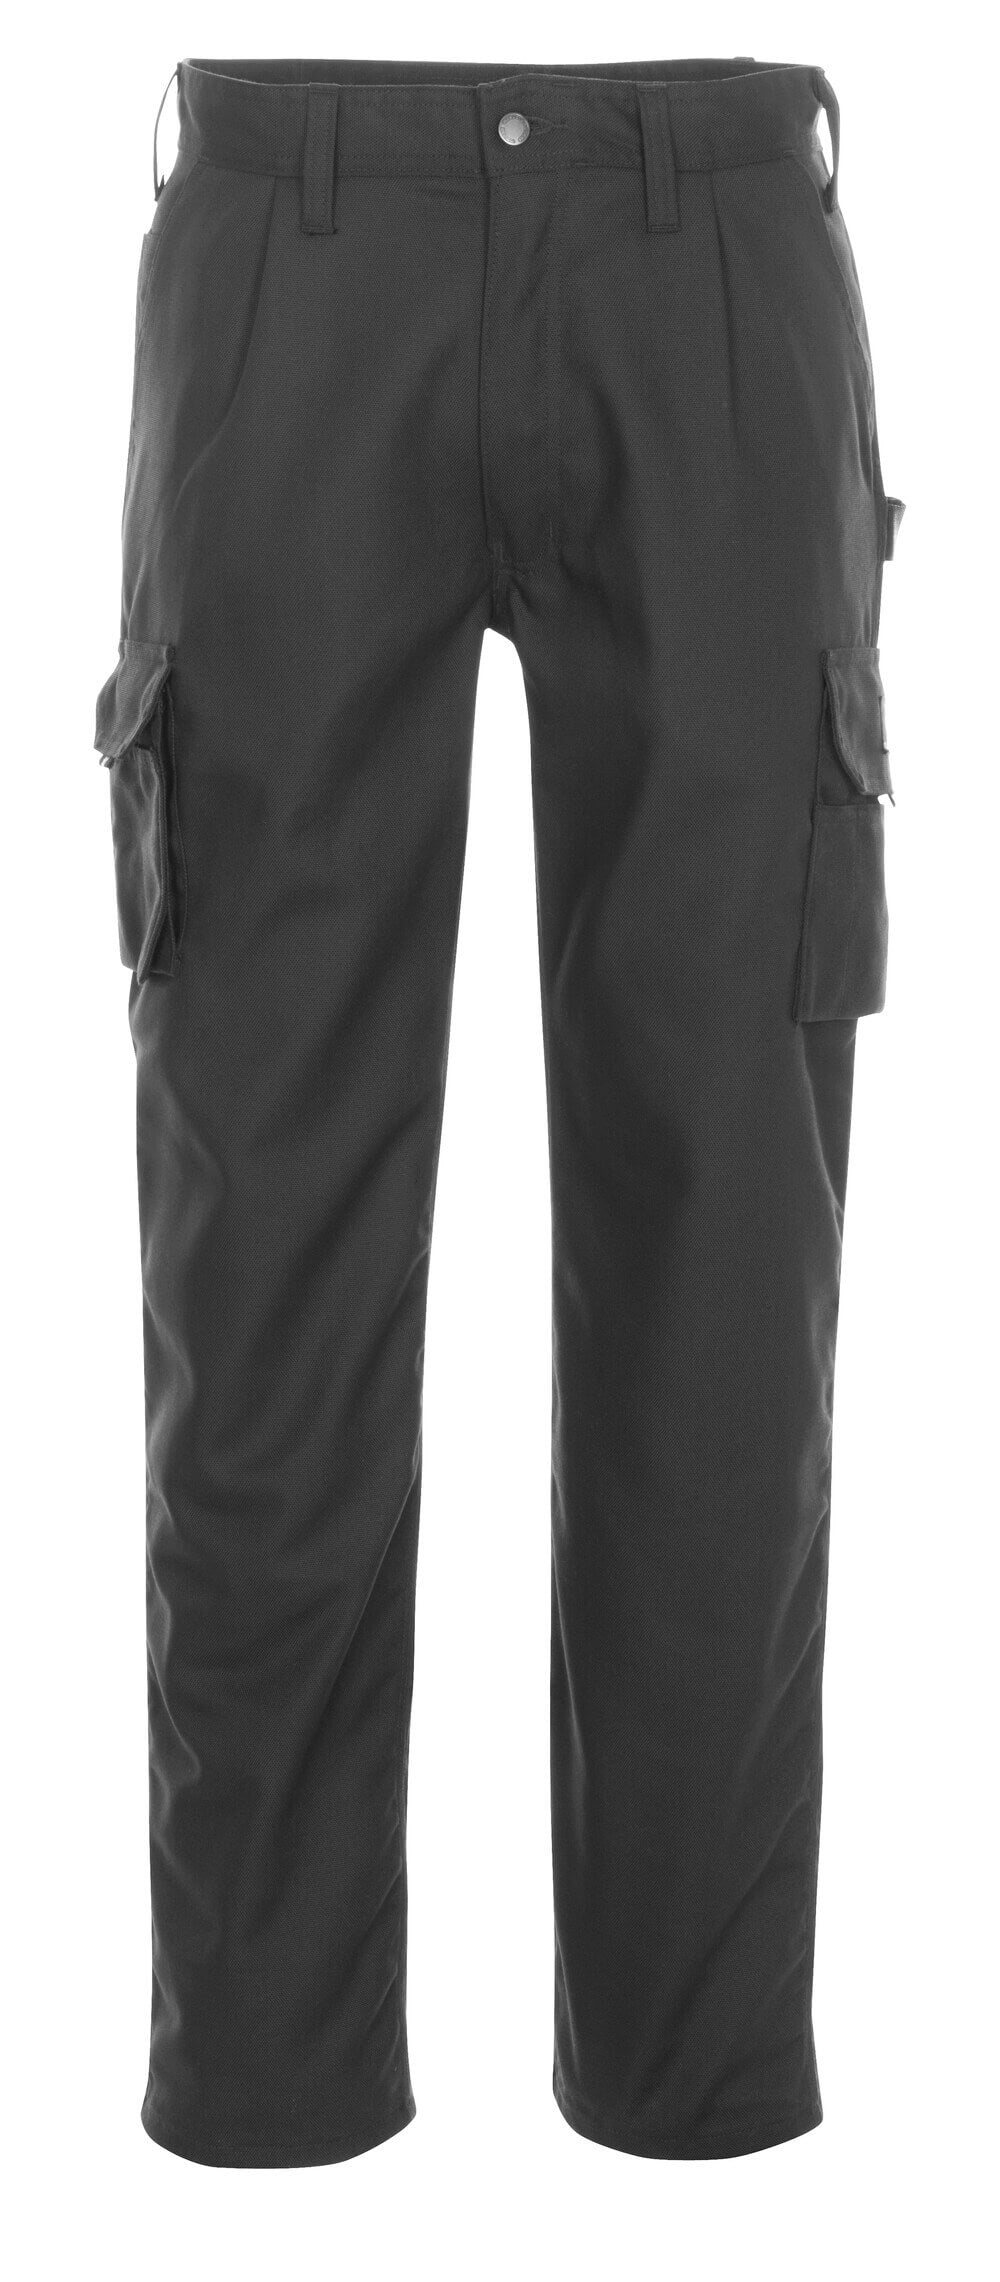 MASCOT®HARDWEAR Trousers with thigh pockets Toledo 3079 - DaltonSafety